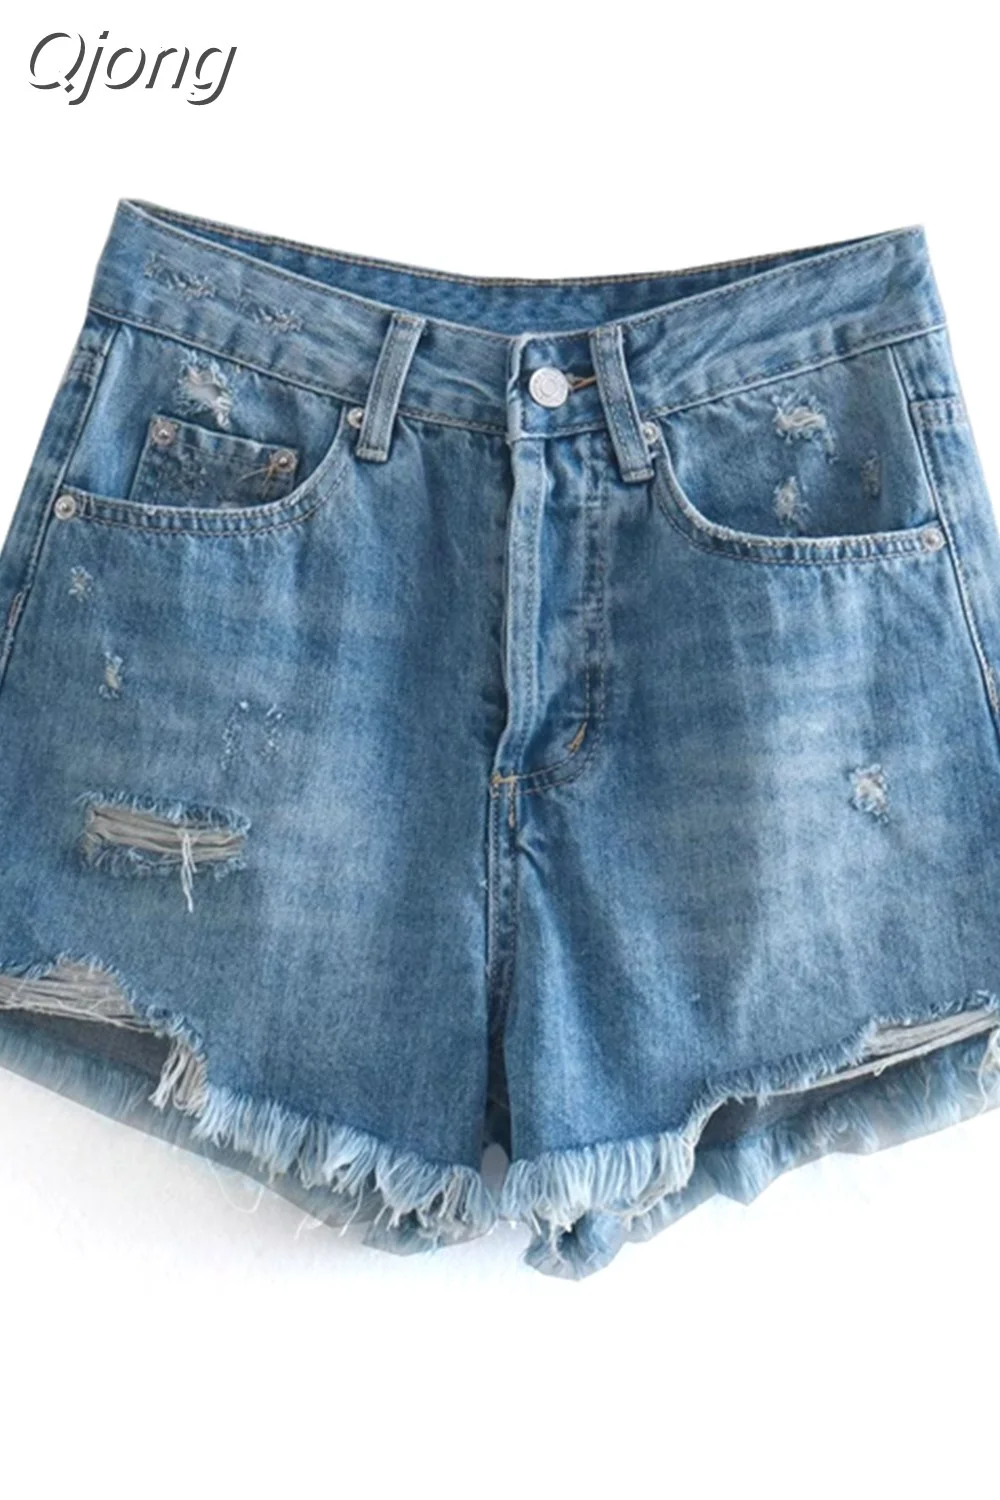 Qjong Traf Women's Denim Shorts High Waist Short Woman Fashion Y2k Blue Shorts Jeans Shorts for Women Female Jeans Summer Pants